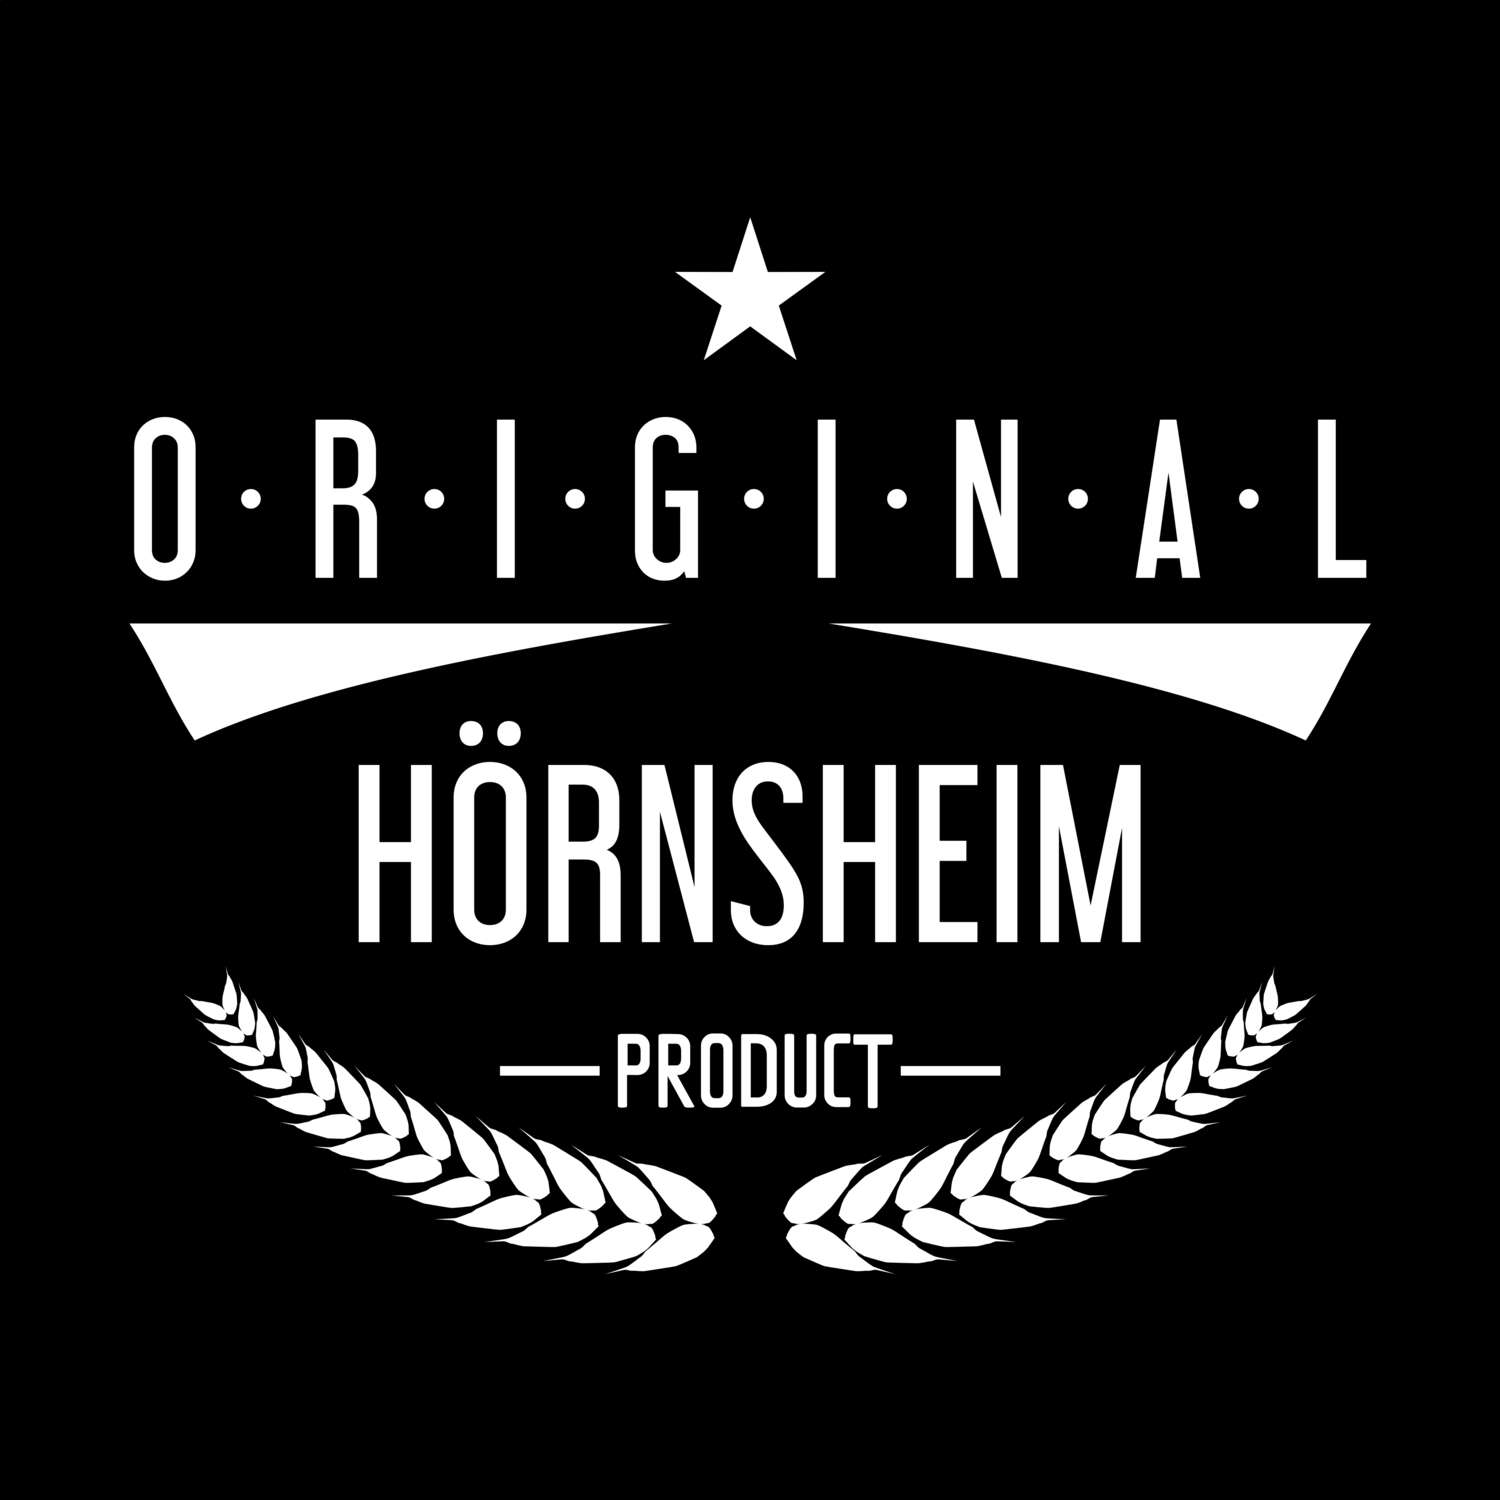 Hörnsheim T-Shirt »Original Product«